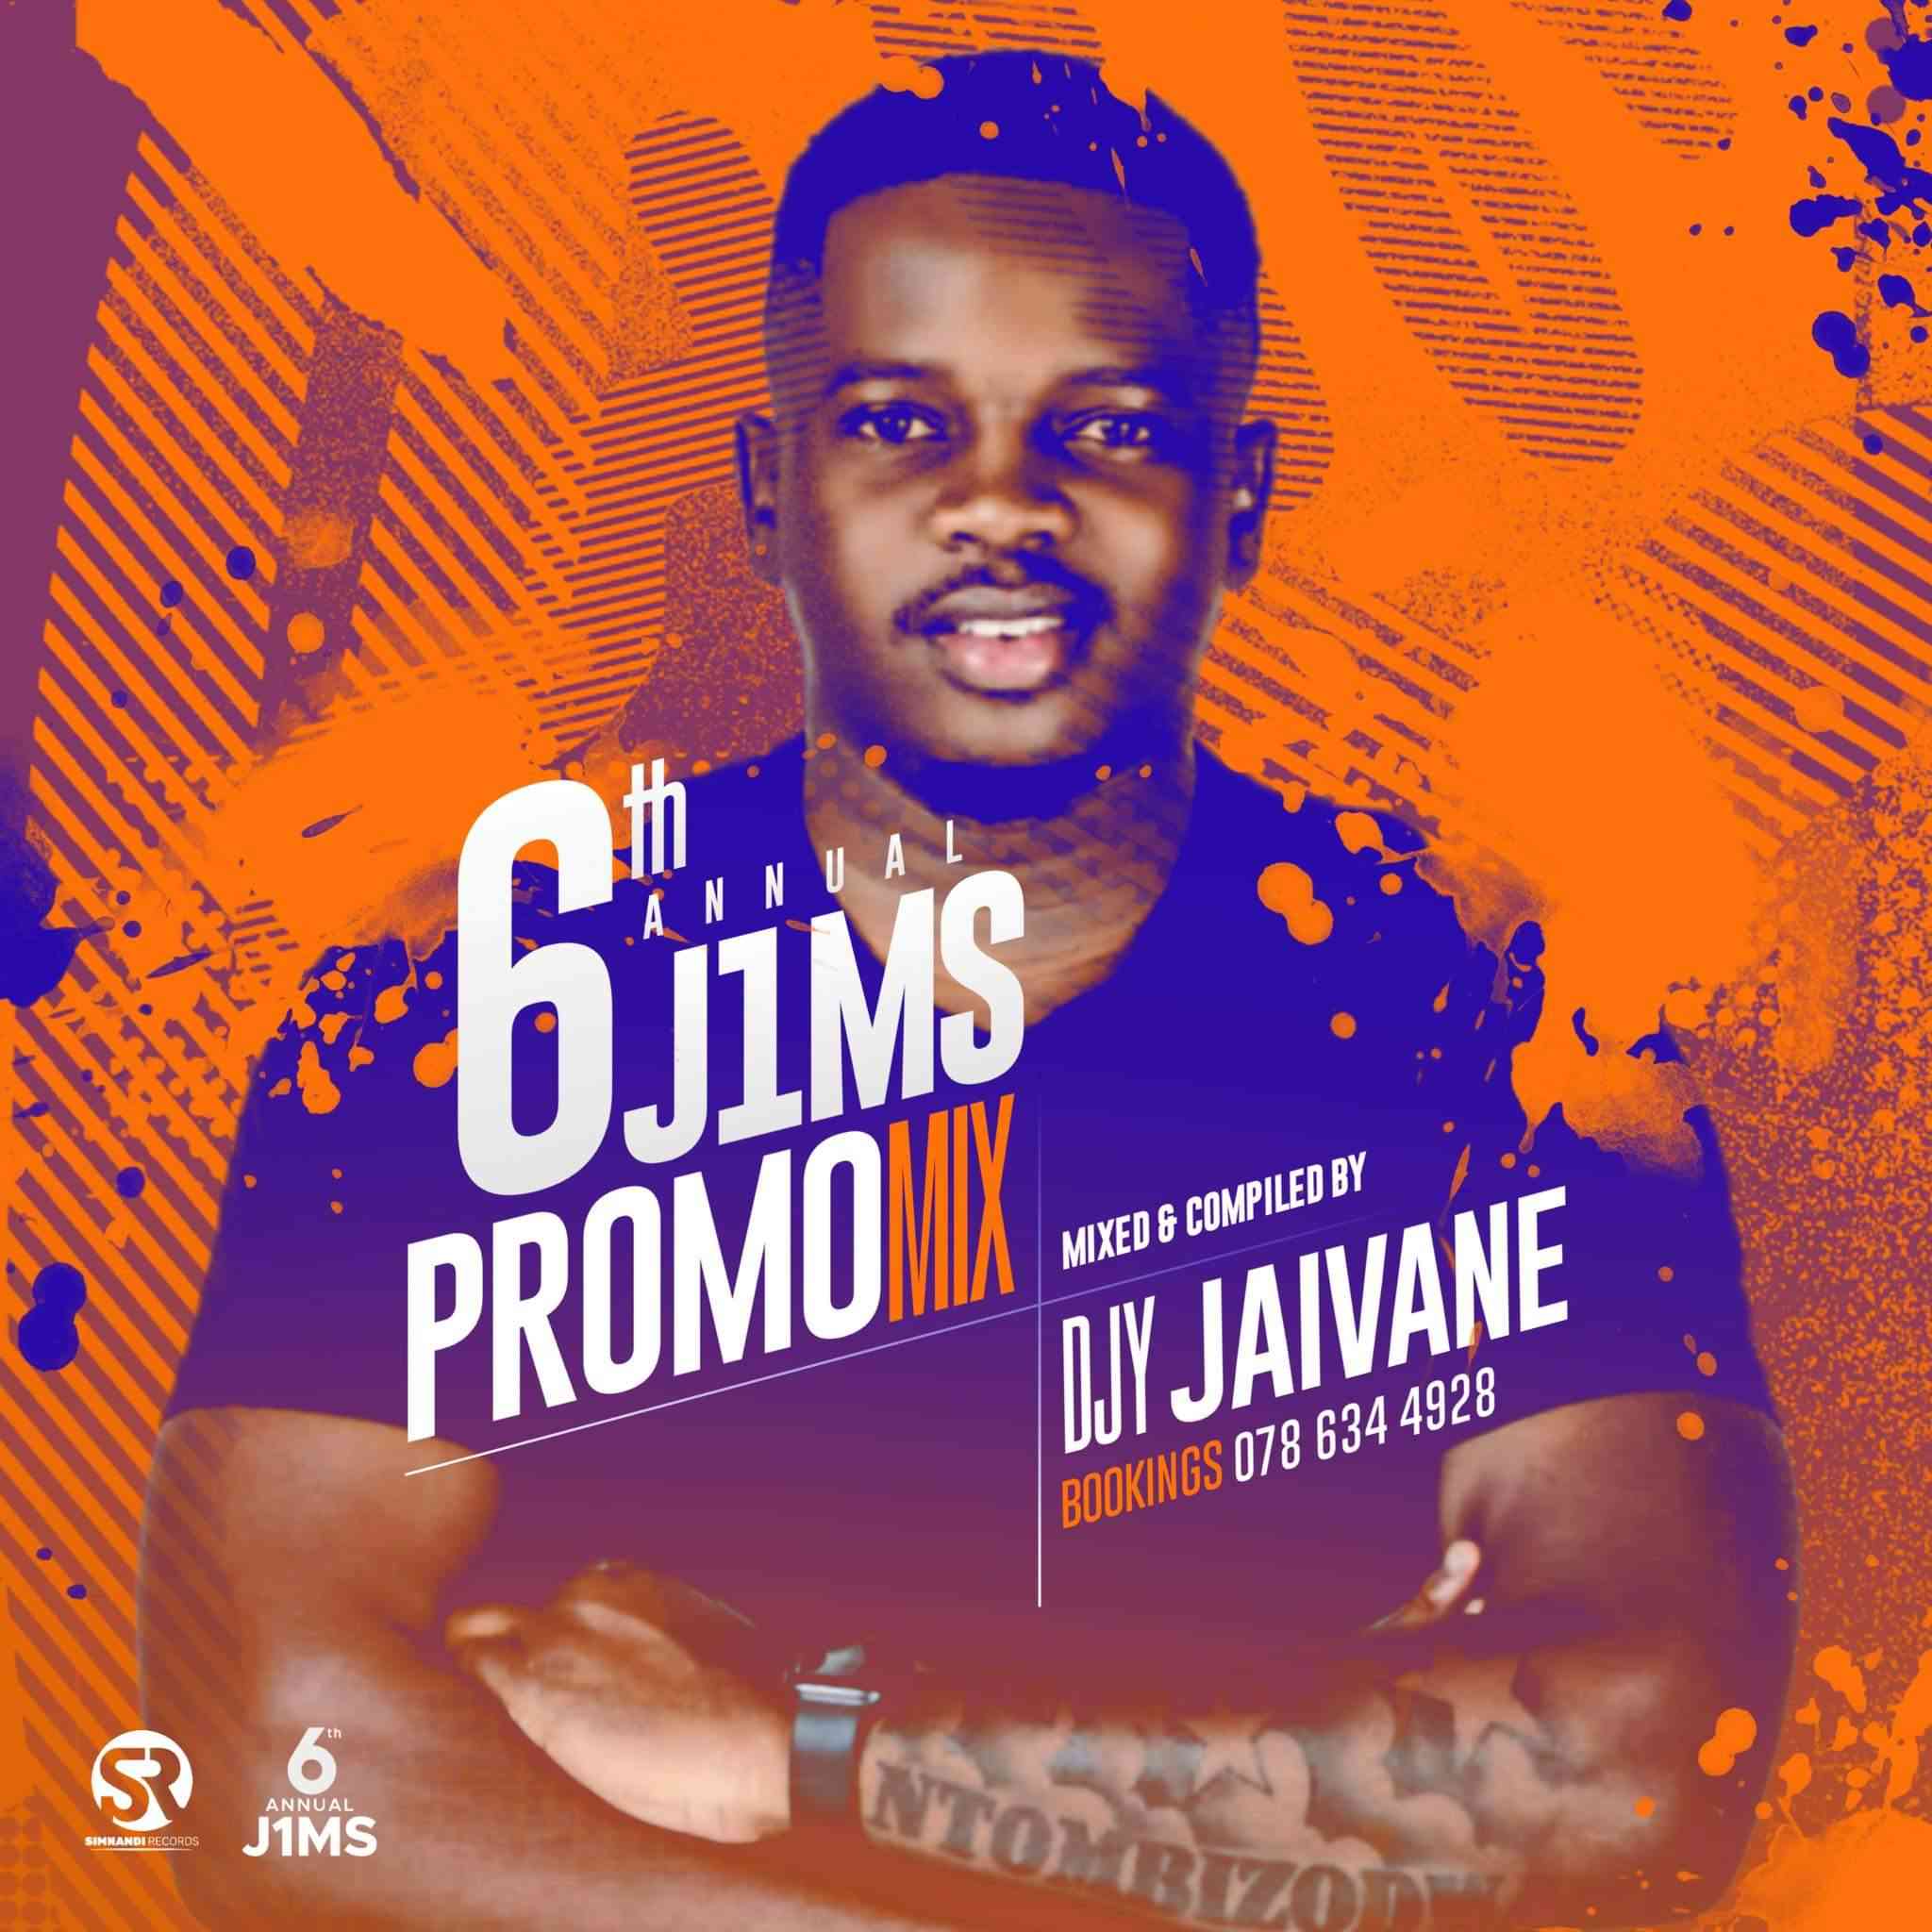 Djy Jaivane 6th Annual J1MS Promo Live Mix (Strictly Simnandi Records Music)